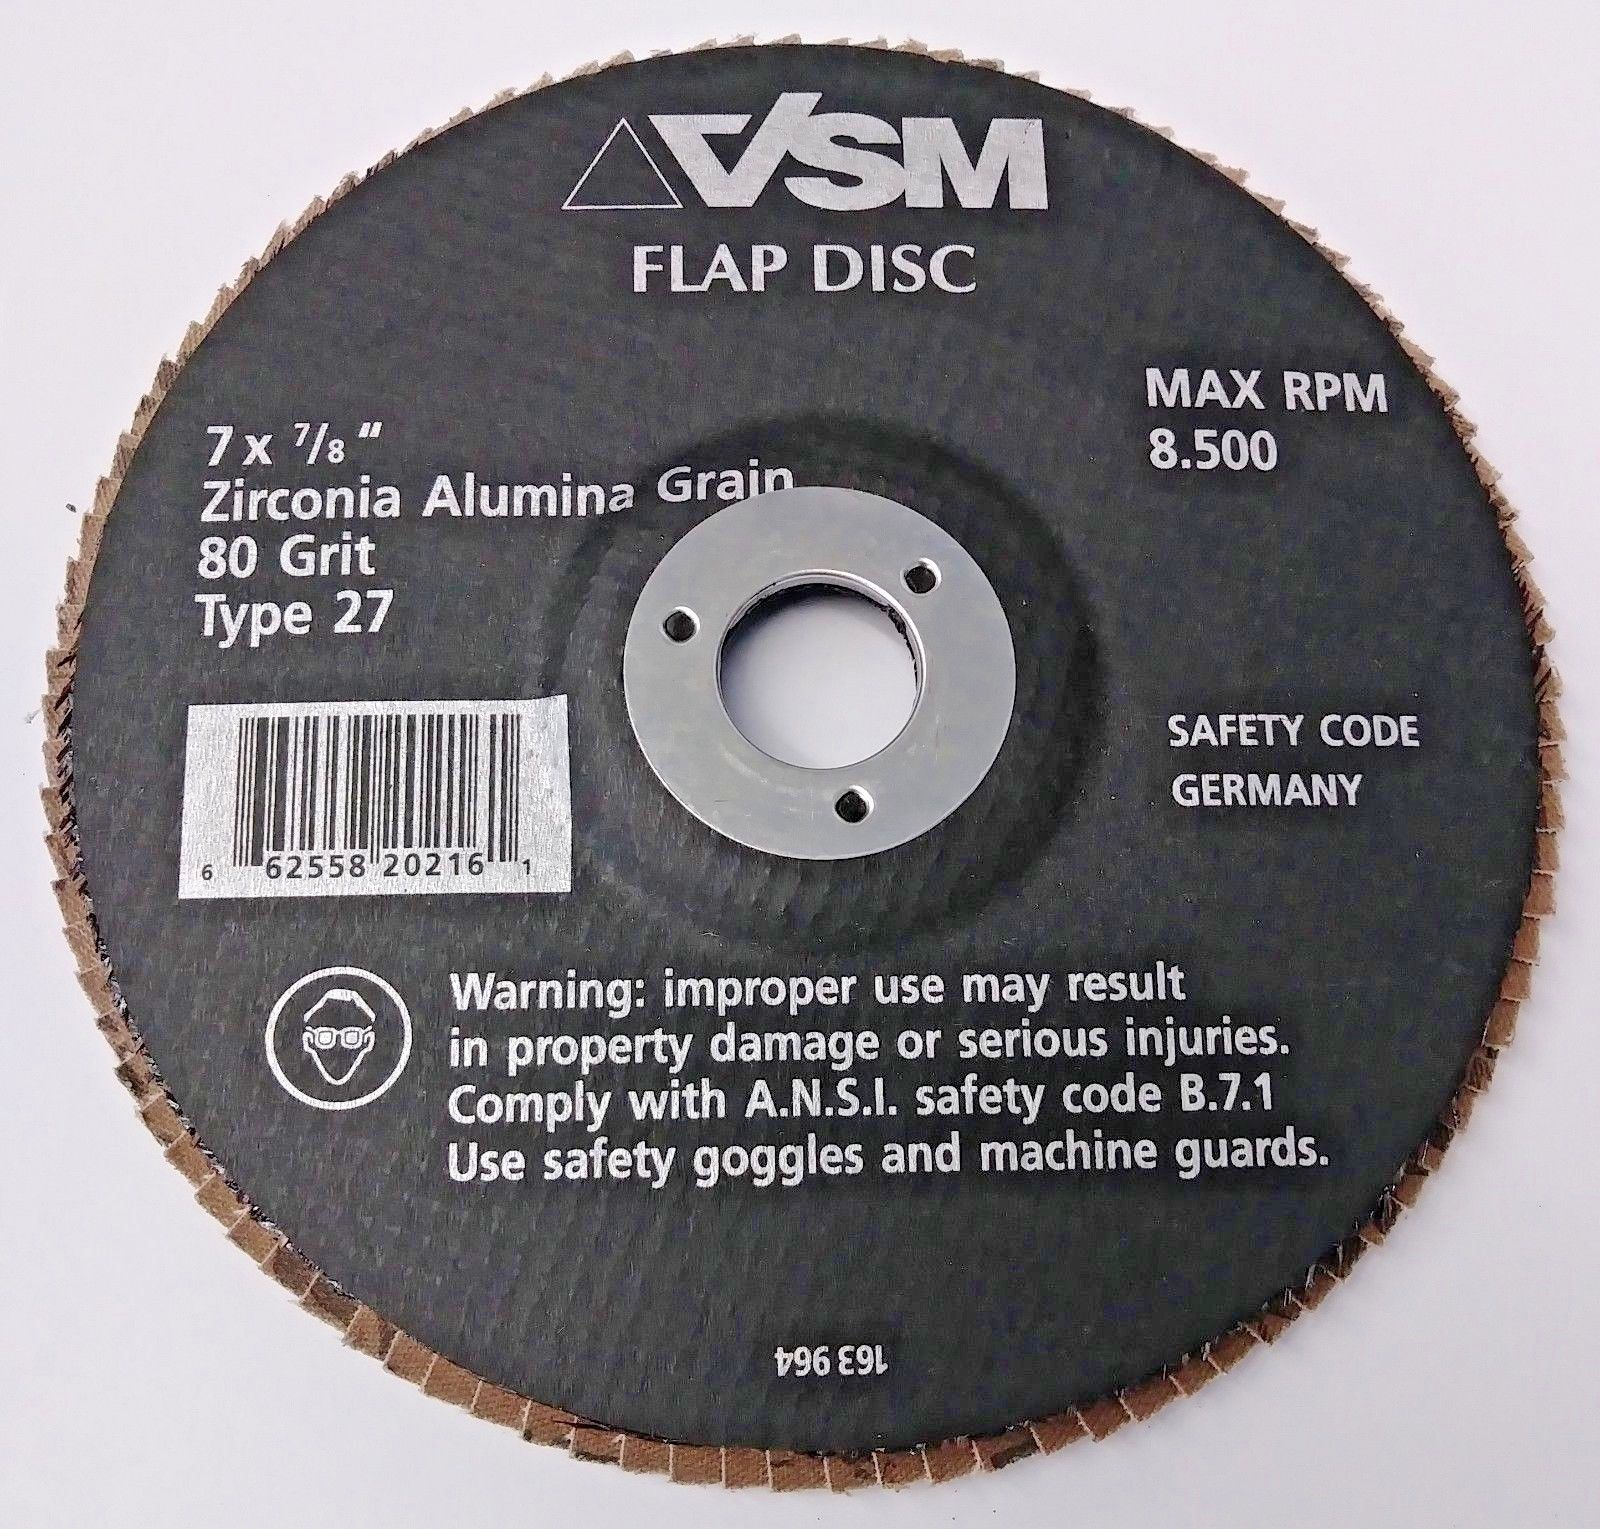 VSM 163 964 7" x 7/8" Zirconia Alumina Grain 80 Grit Type 27 Flap Disc Germany